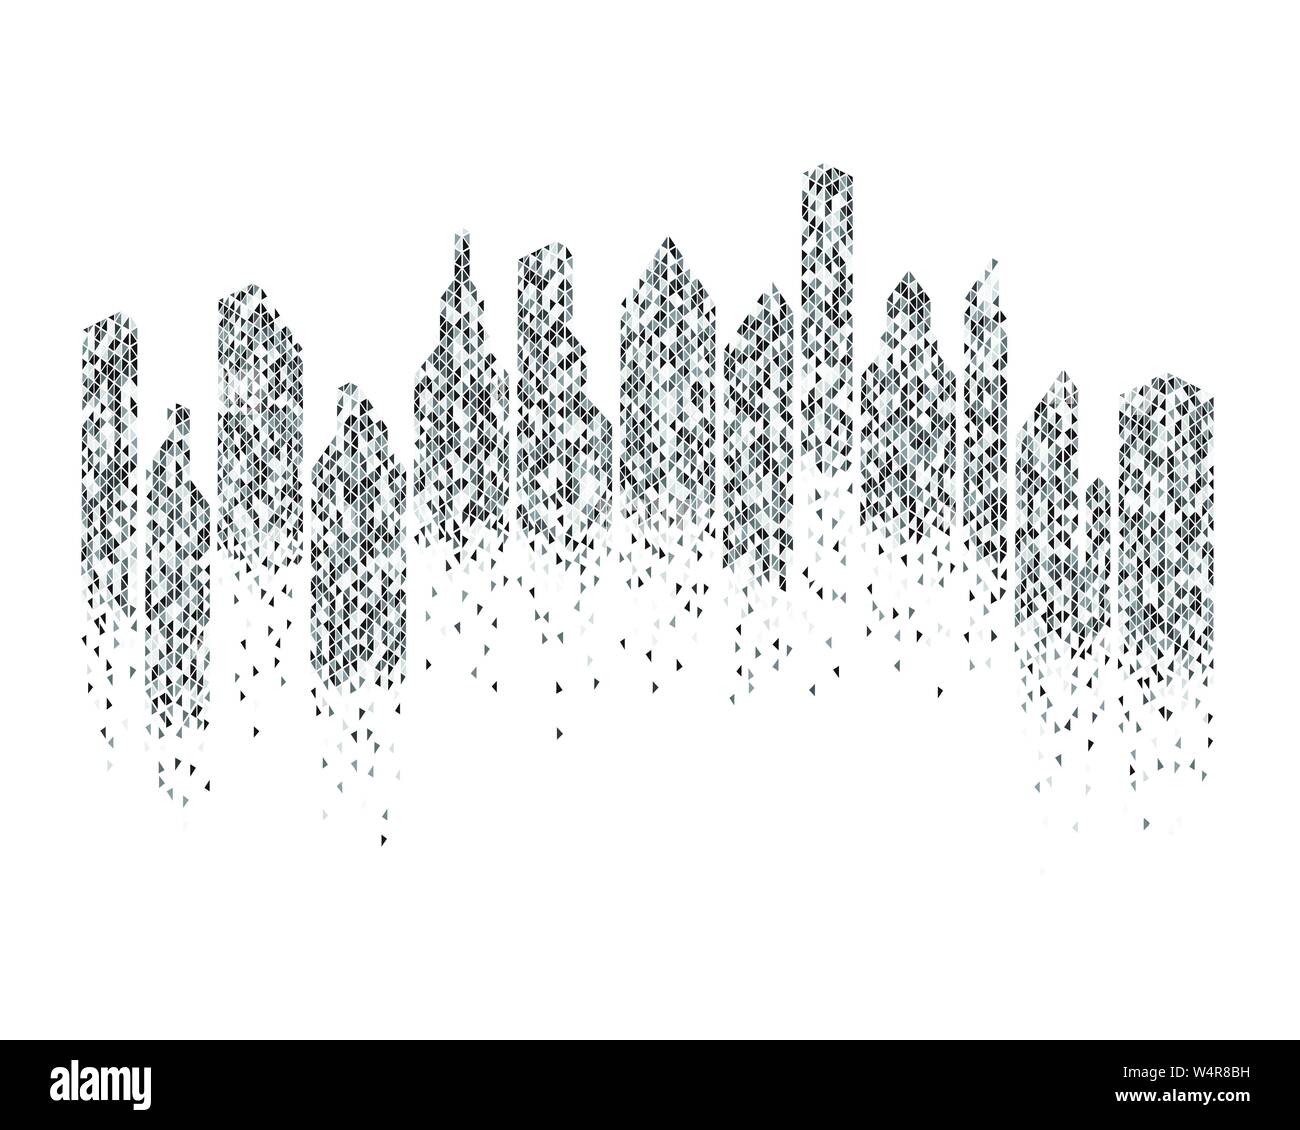 city skyline background vector illustration design Stock Vector